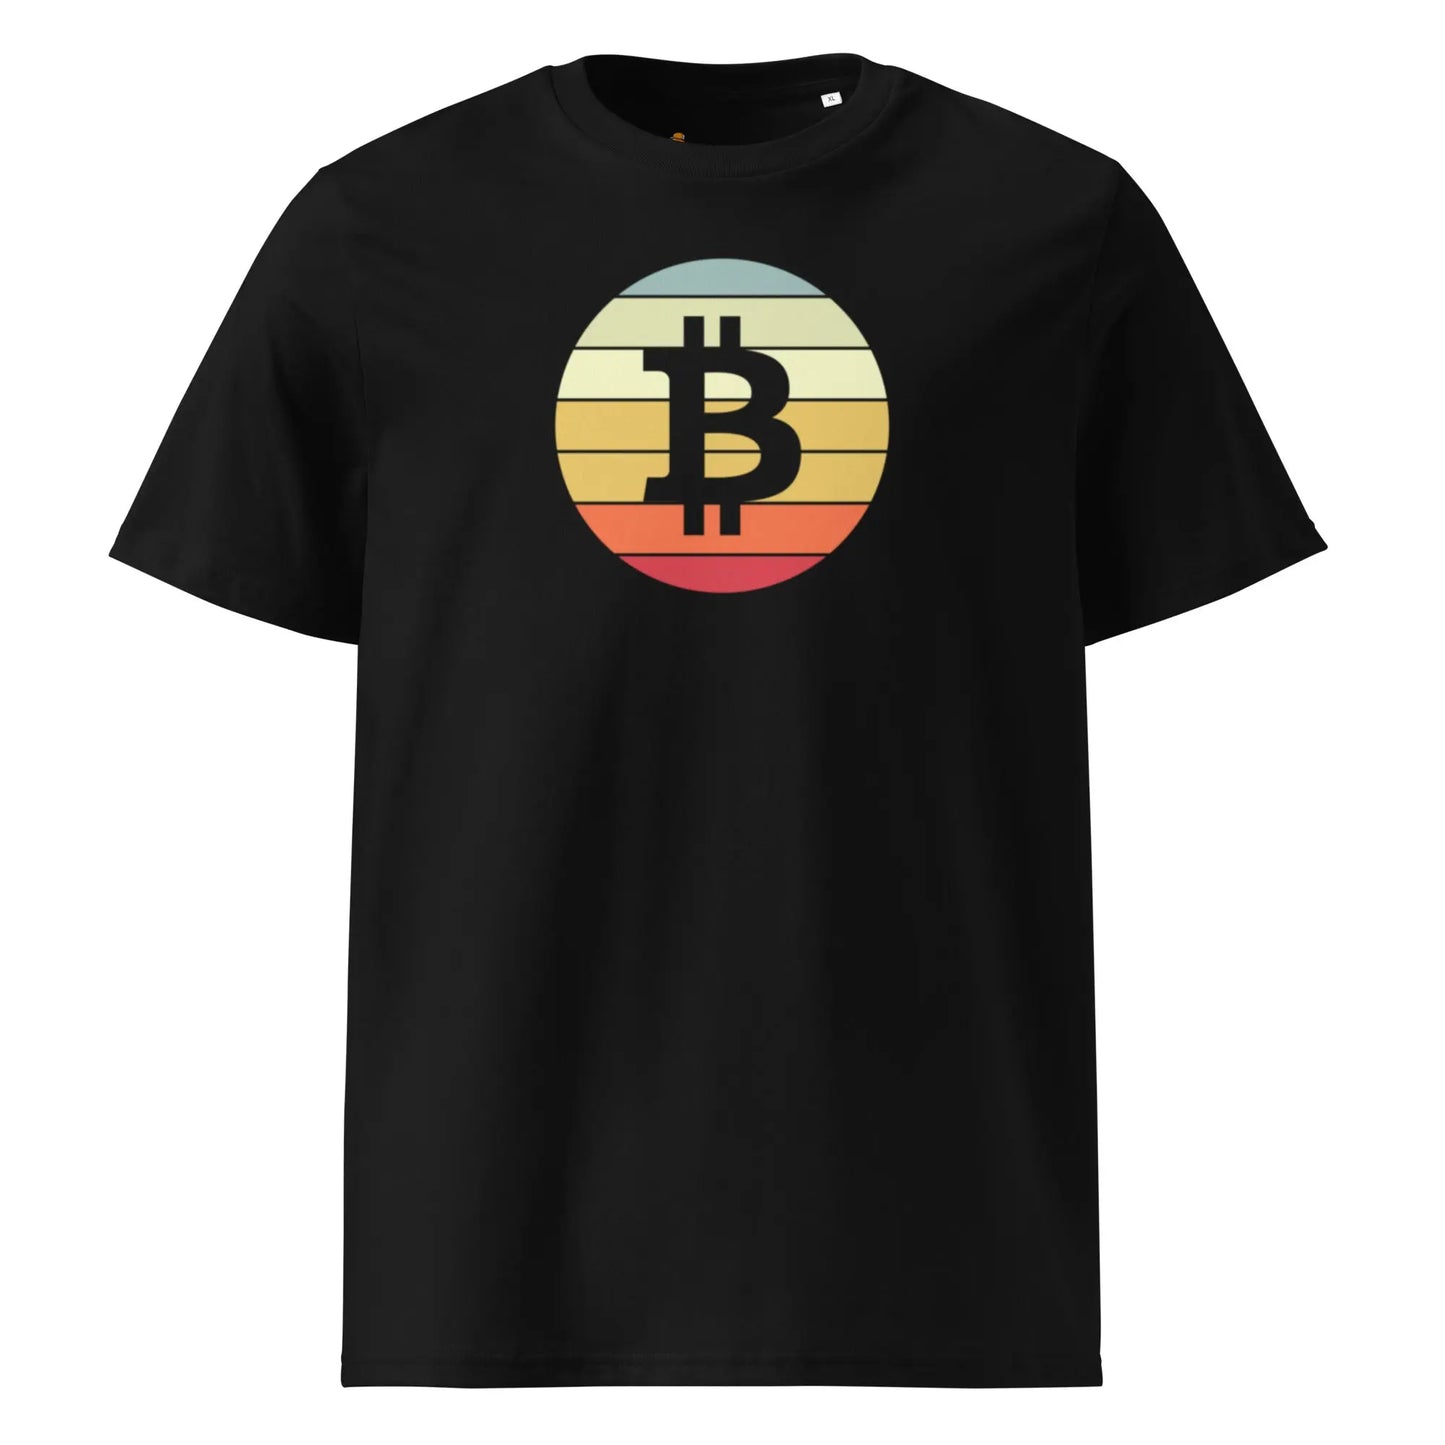 Vintage Bitcoin Sunset - Premium Unisex Organic Cotton Bitcoin T-shirt Navy Black Color